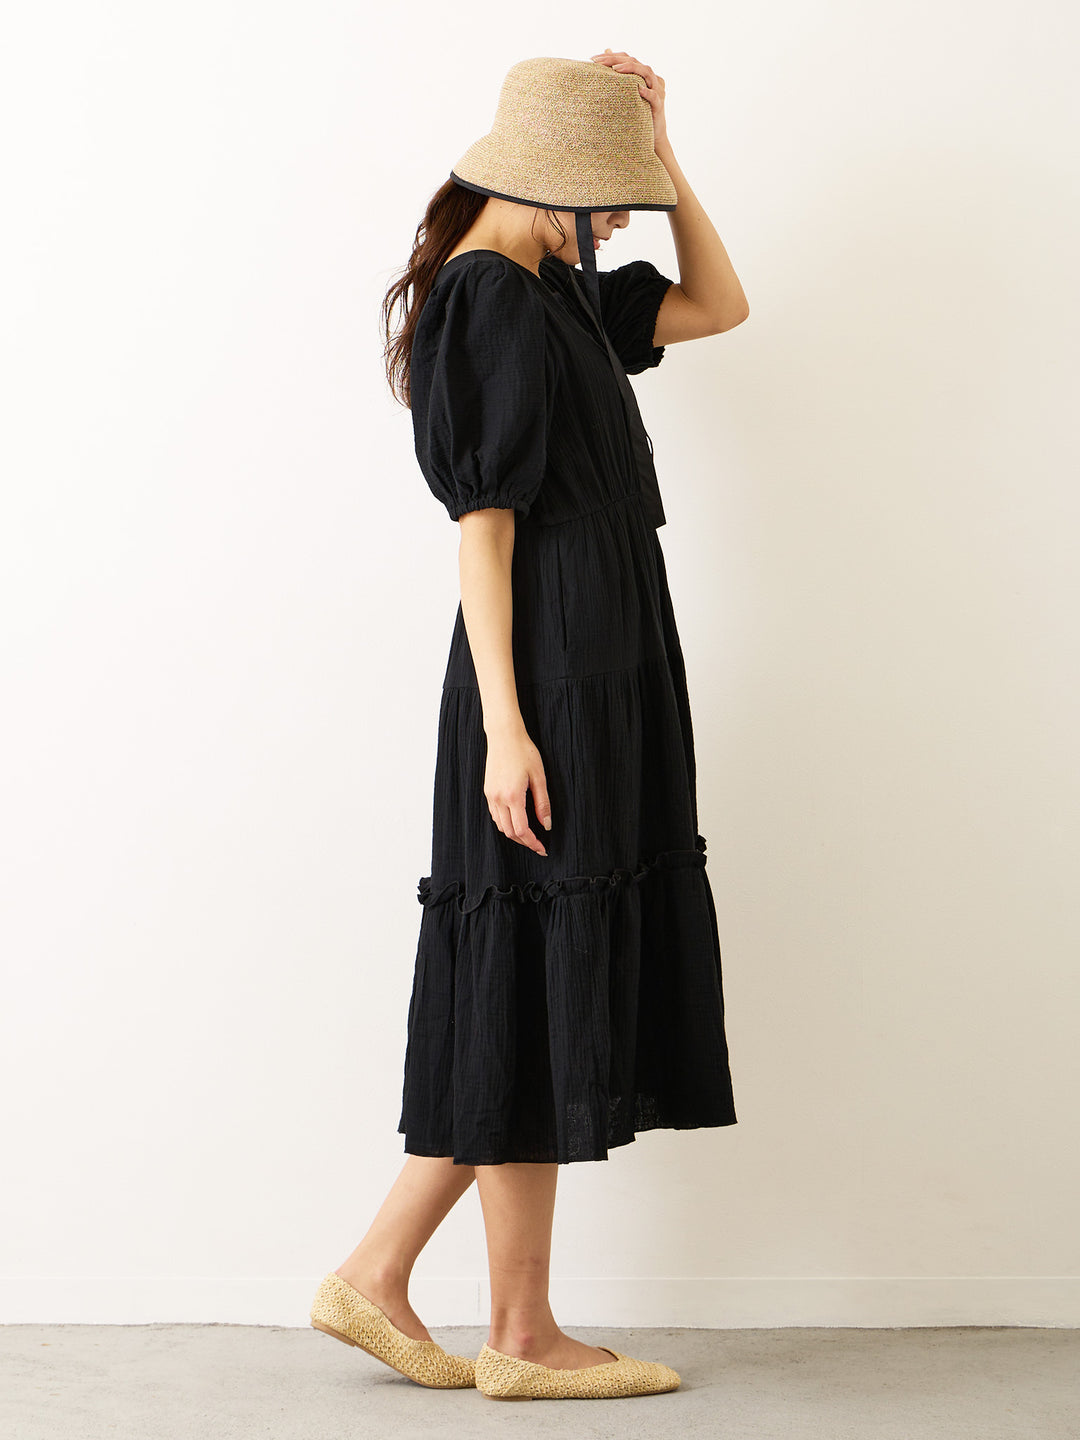 [Maternity/Nursing Clothes] Double Gauze Tiered Dress Black 